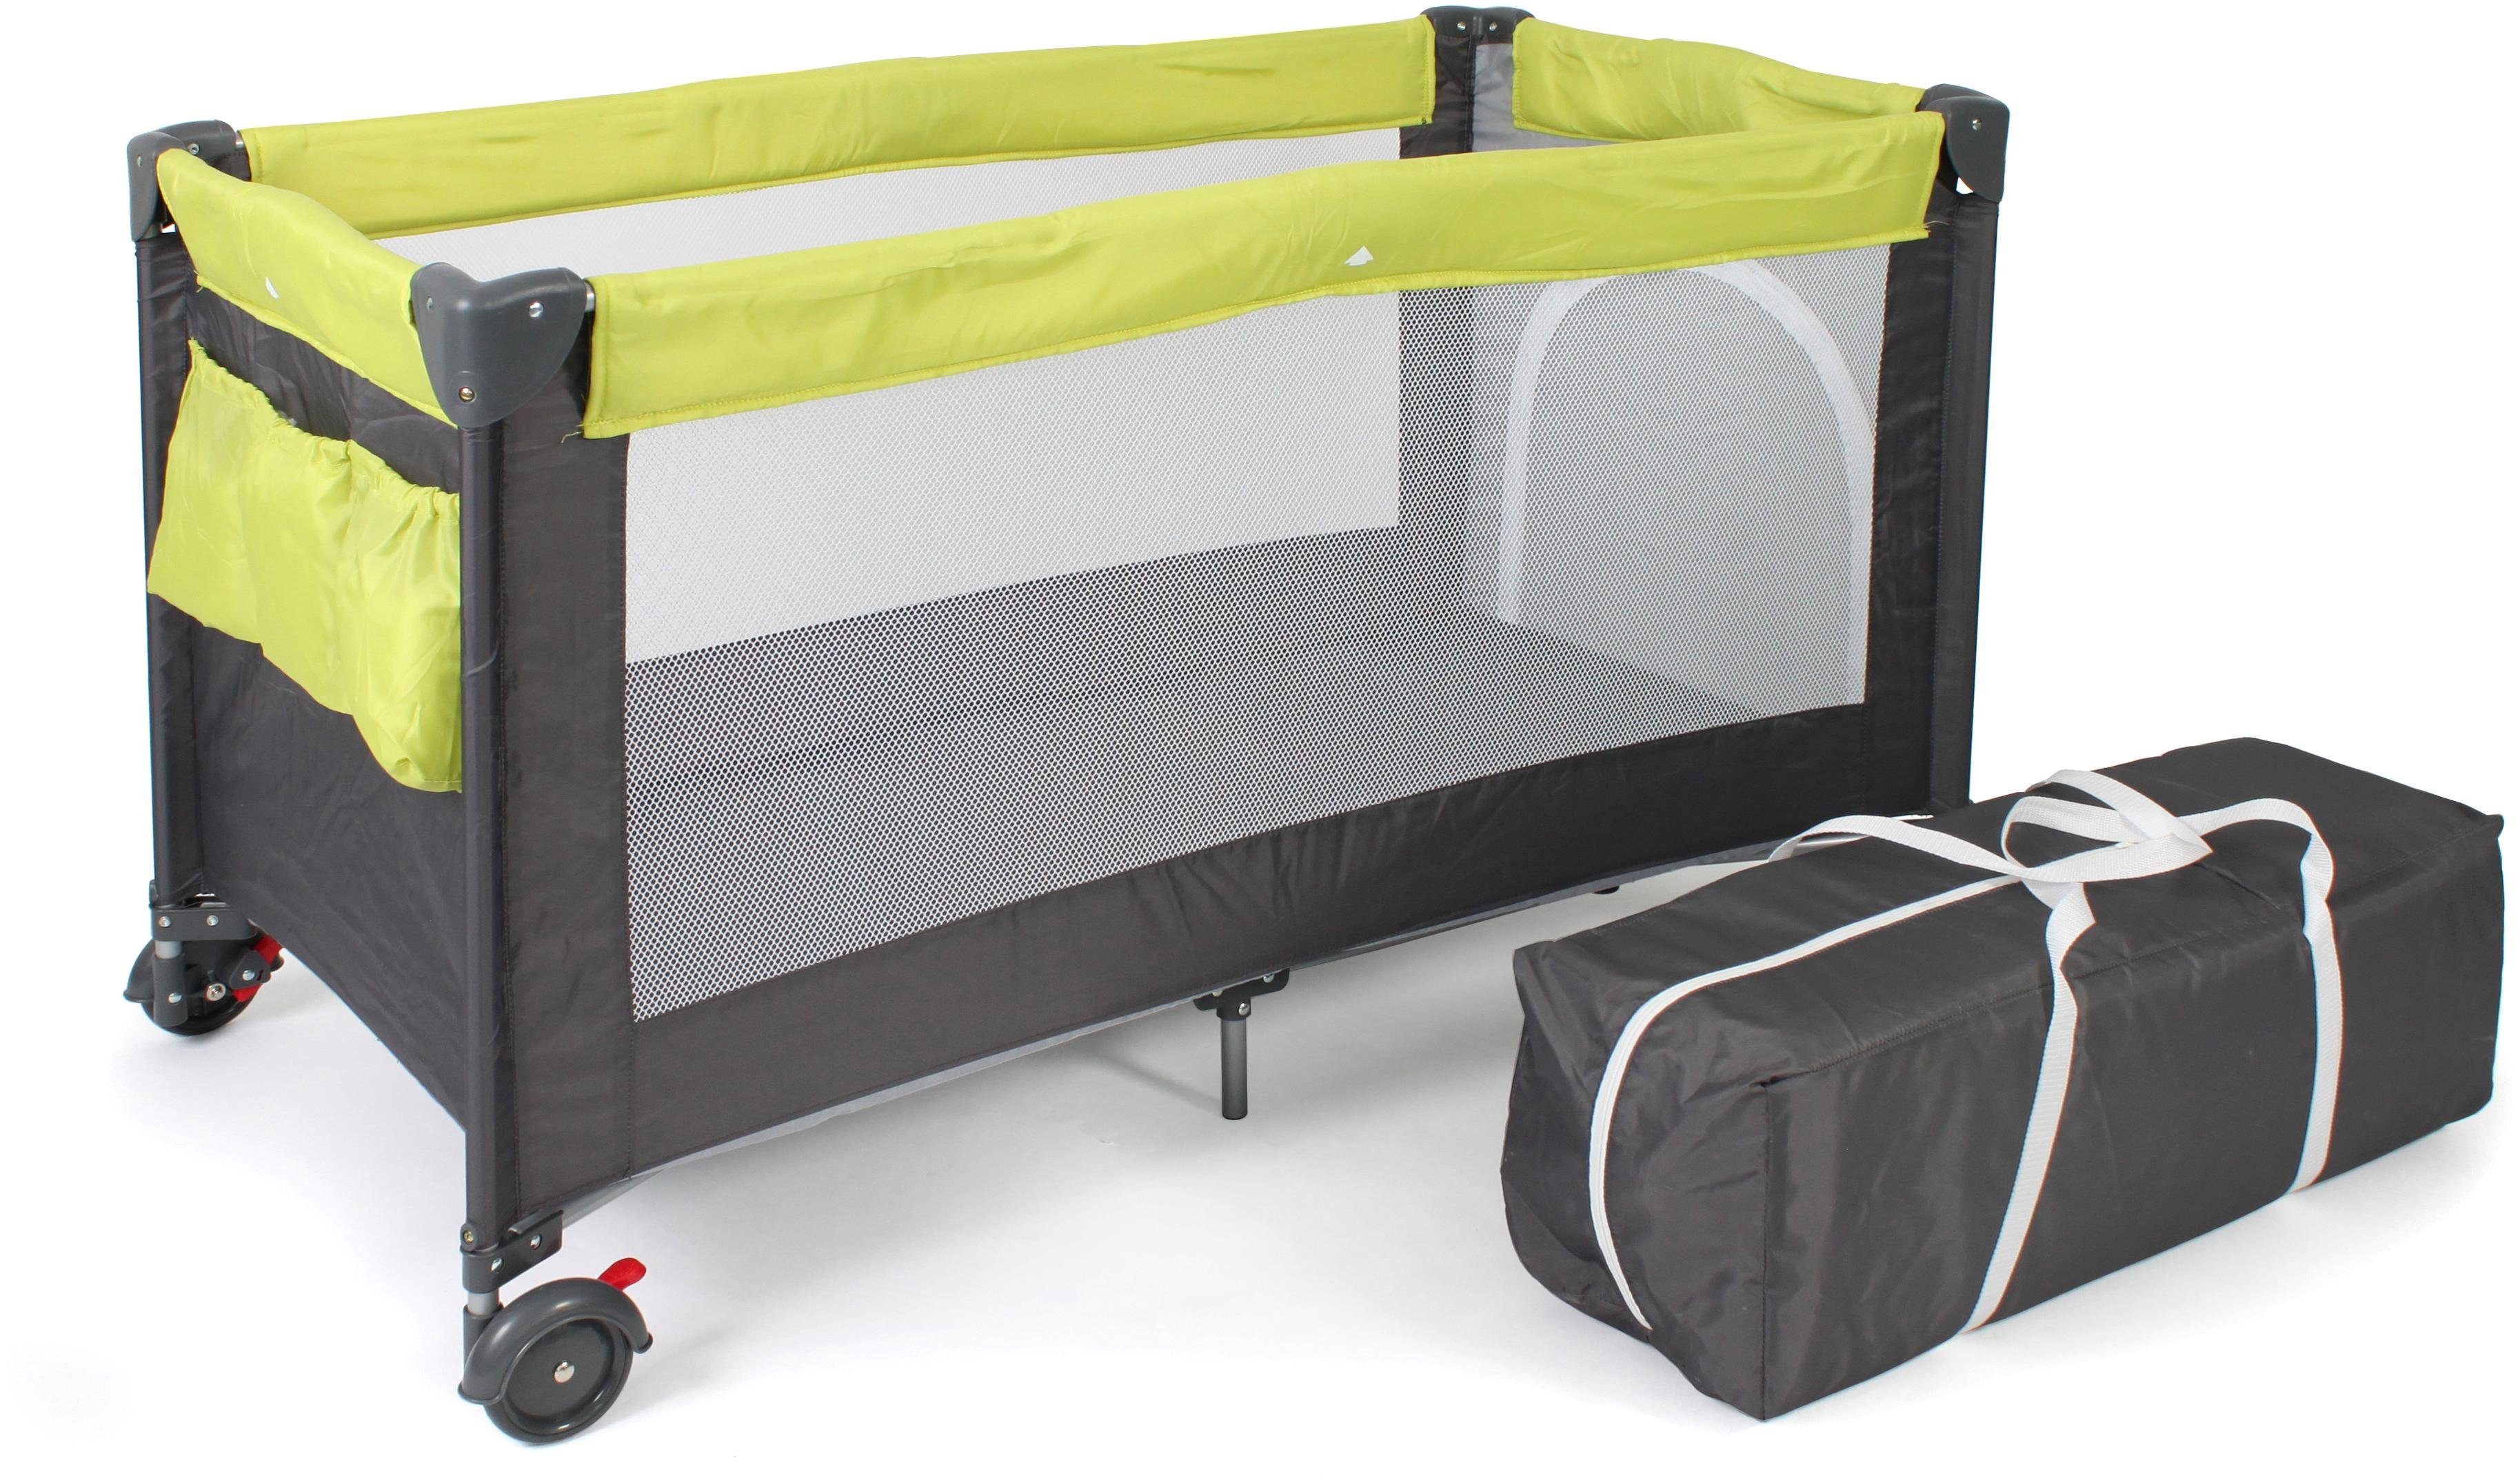 CHIC4BABY Baby-campingbed Luxus, Lemongreen